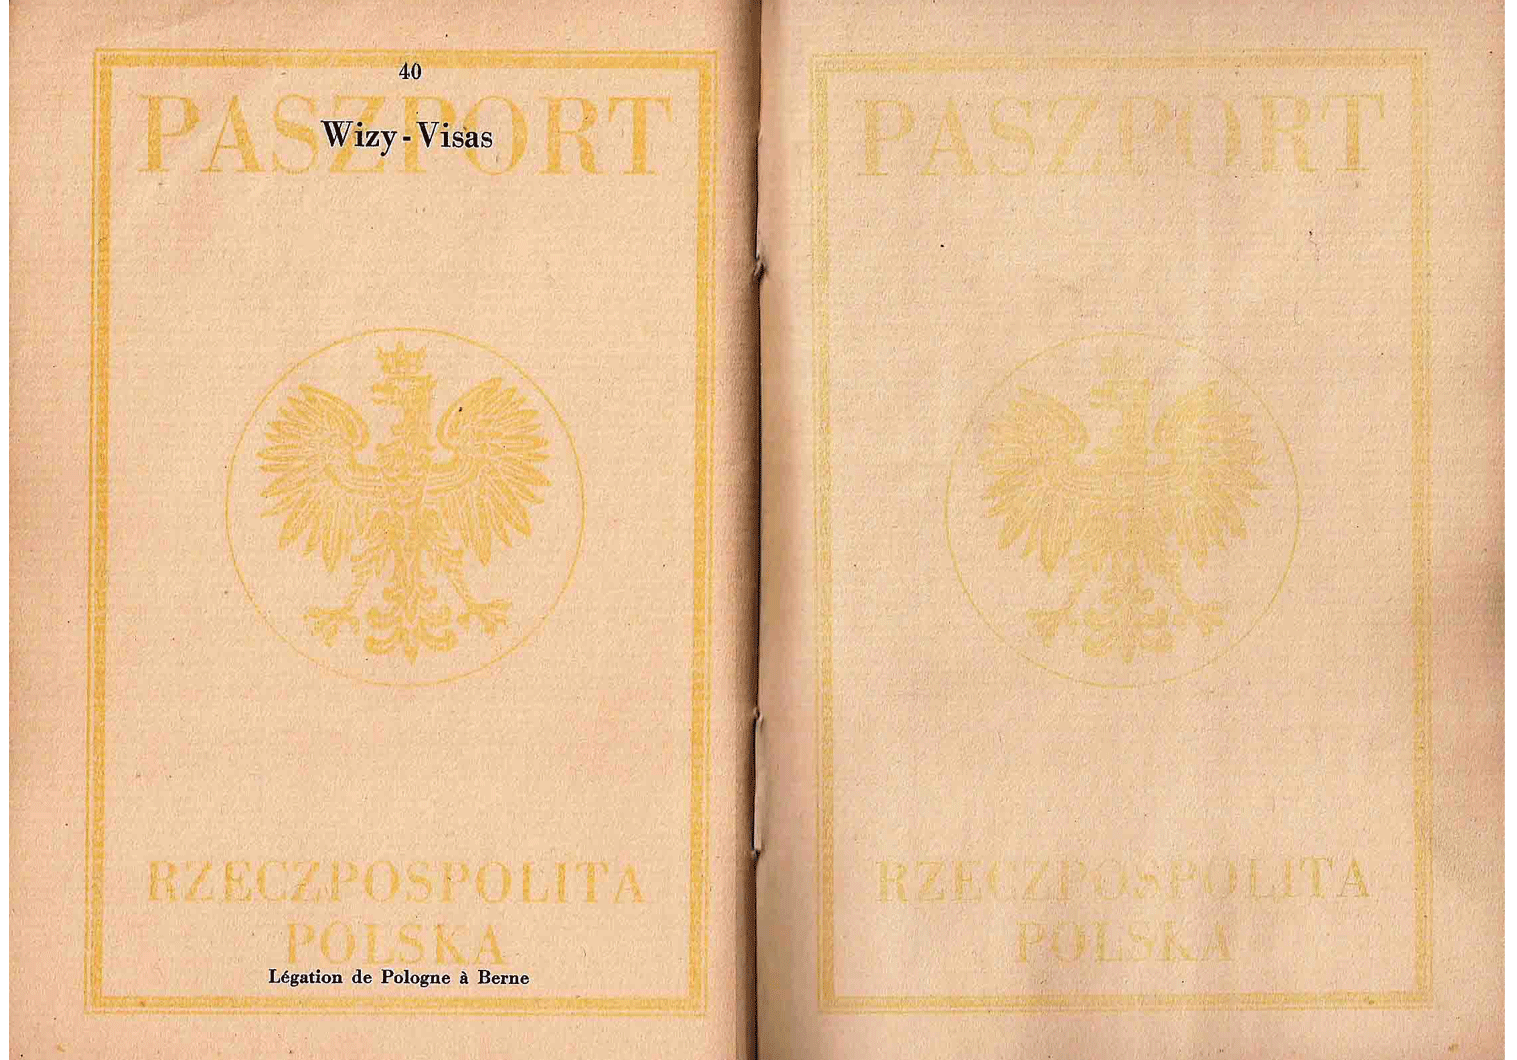 Berne printed Polish Passport.